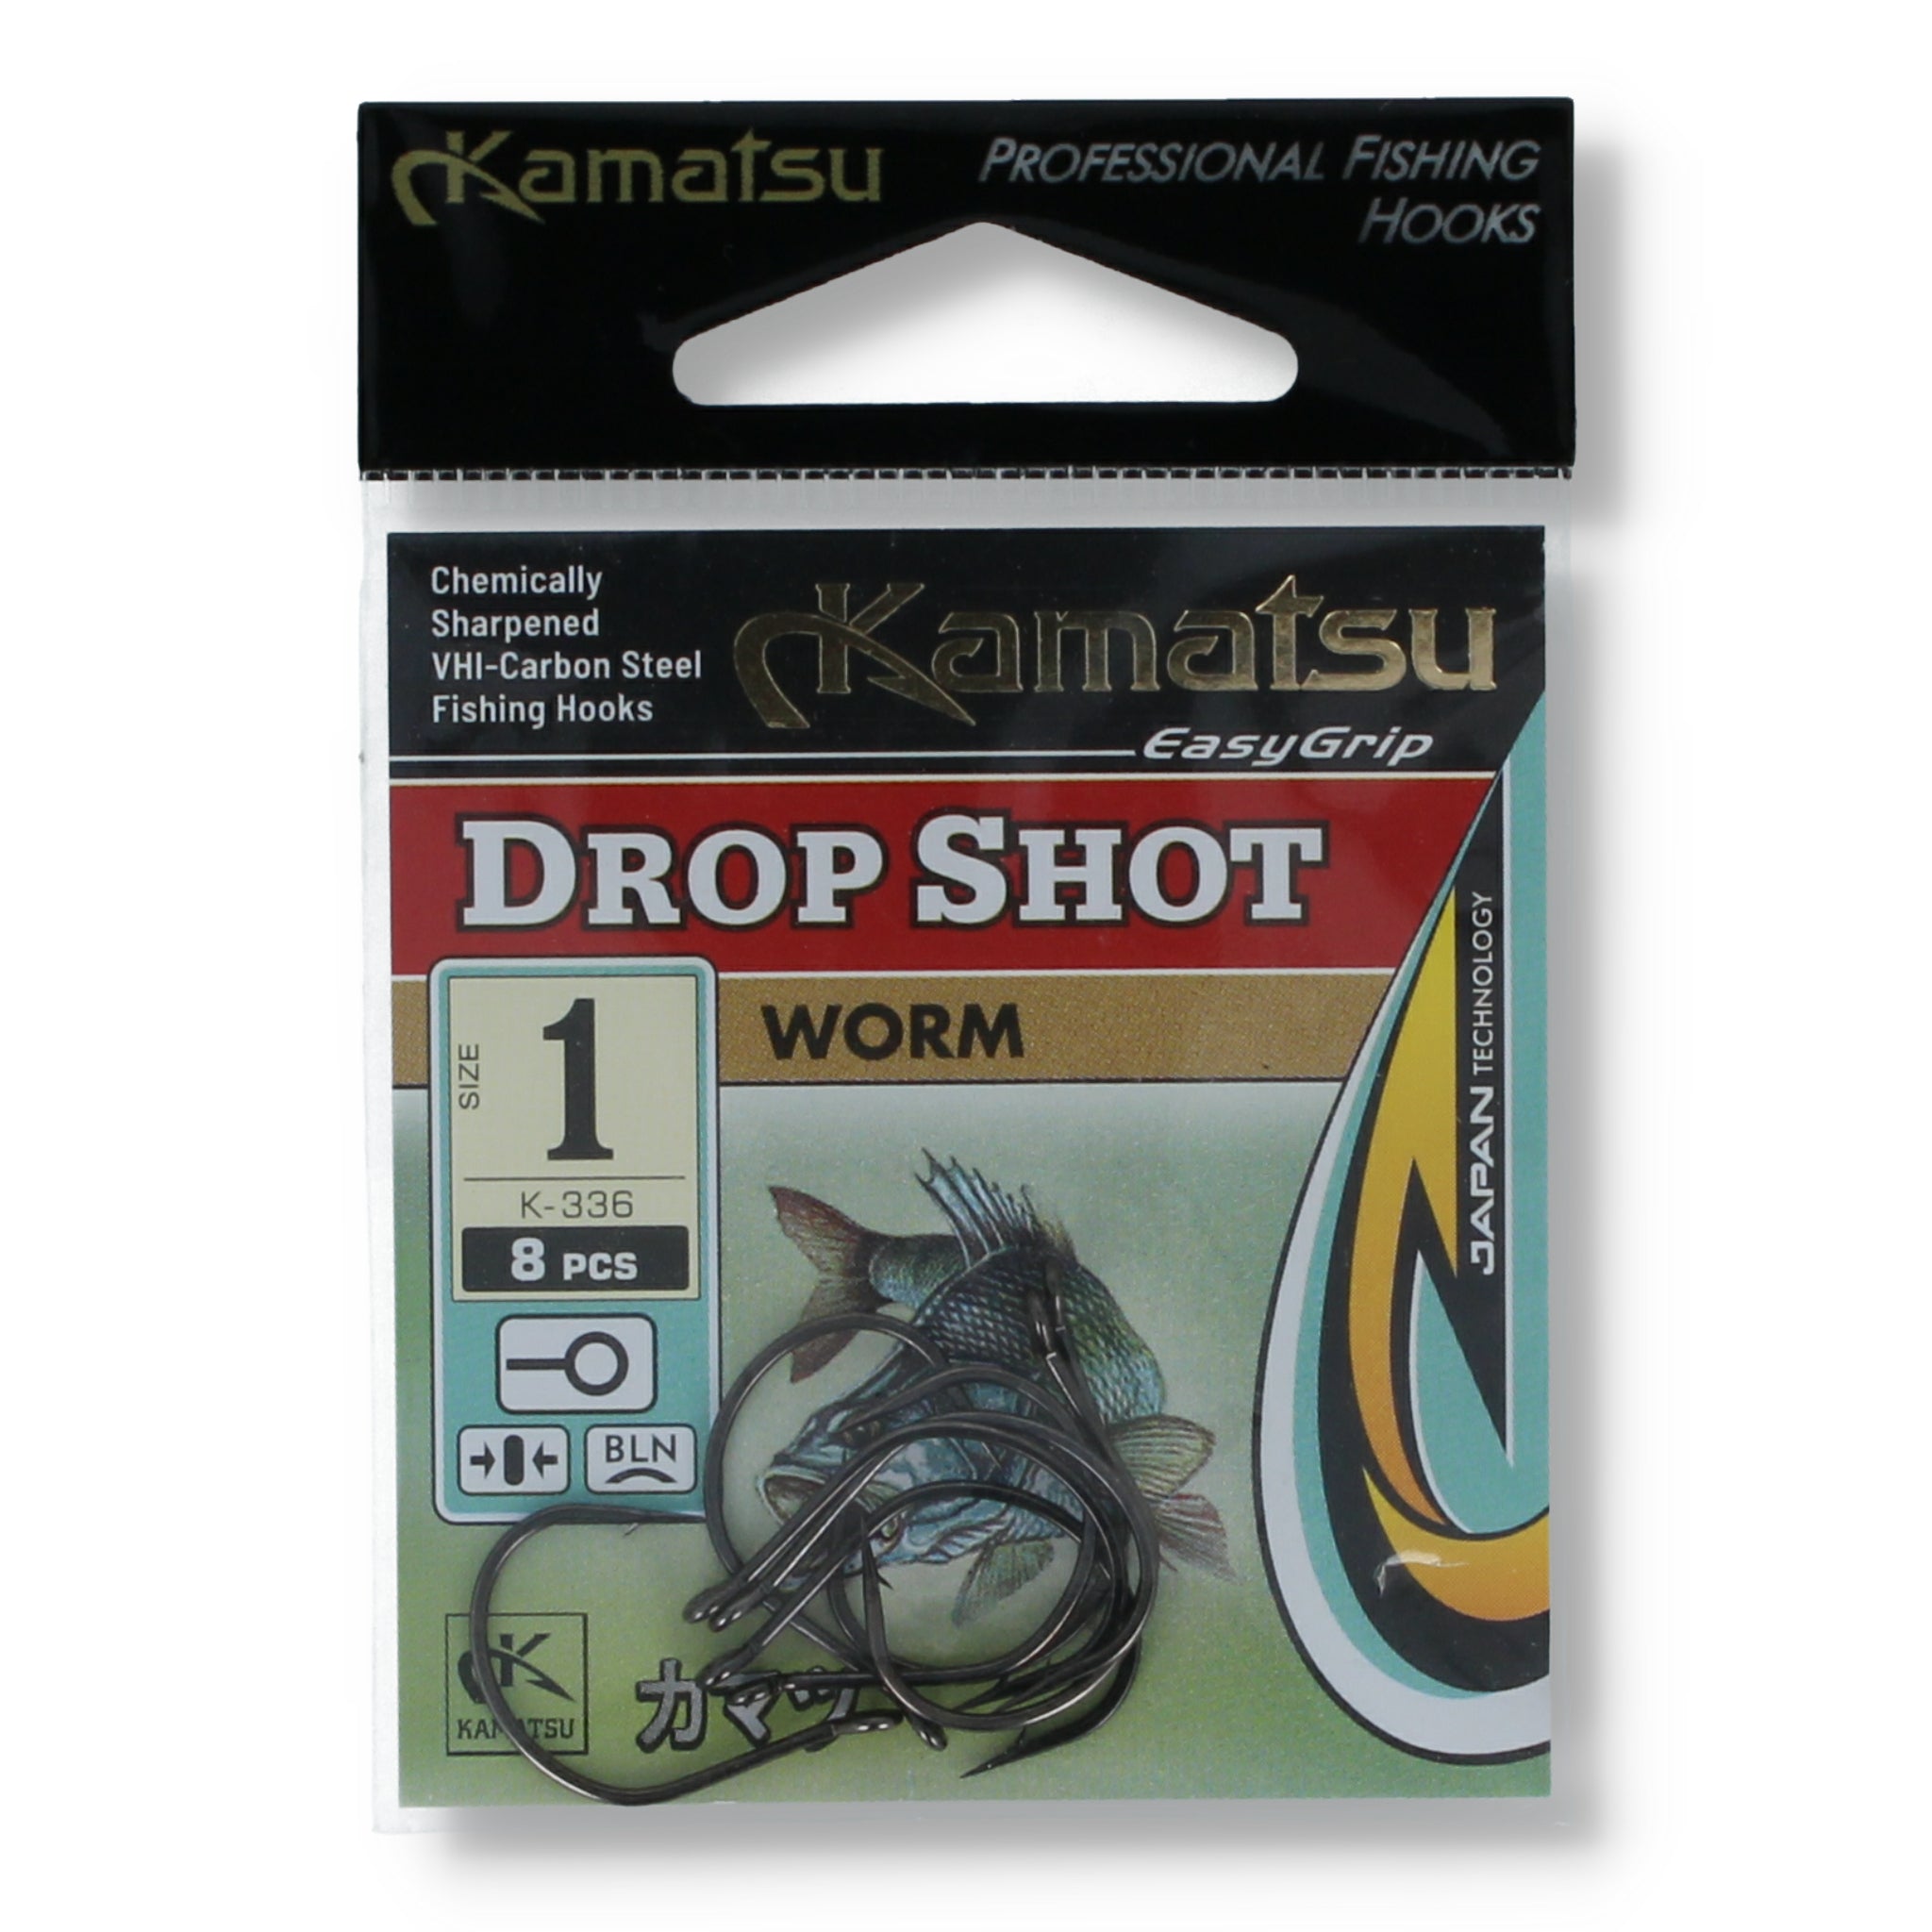 Kamatsu EasyGrip Drop Shot Worm Hooks